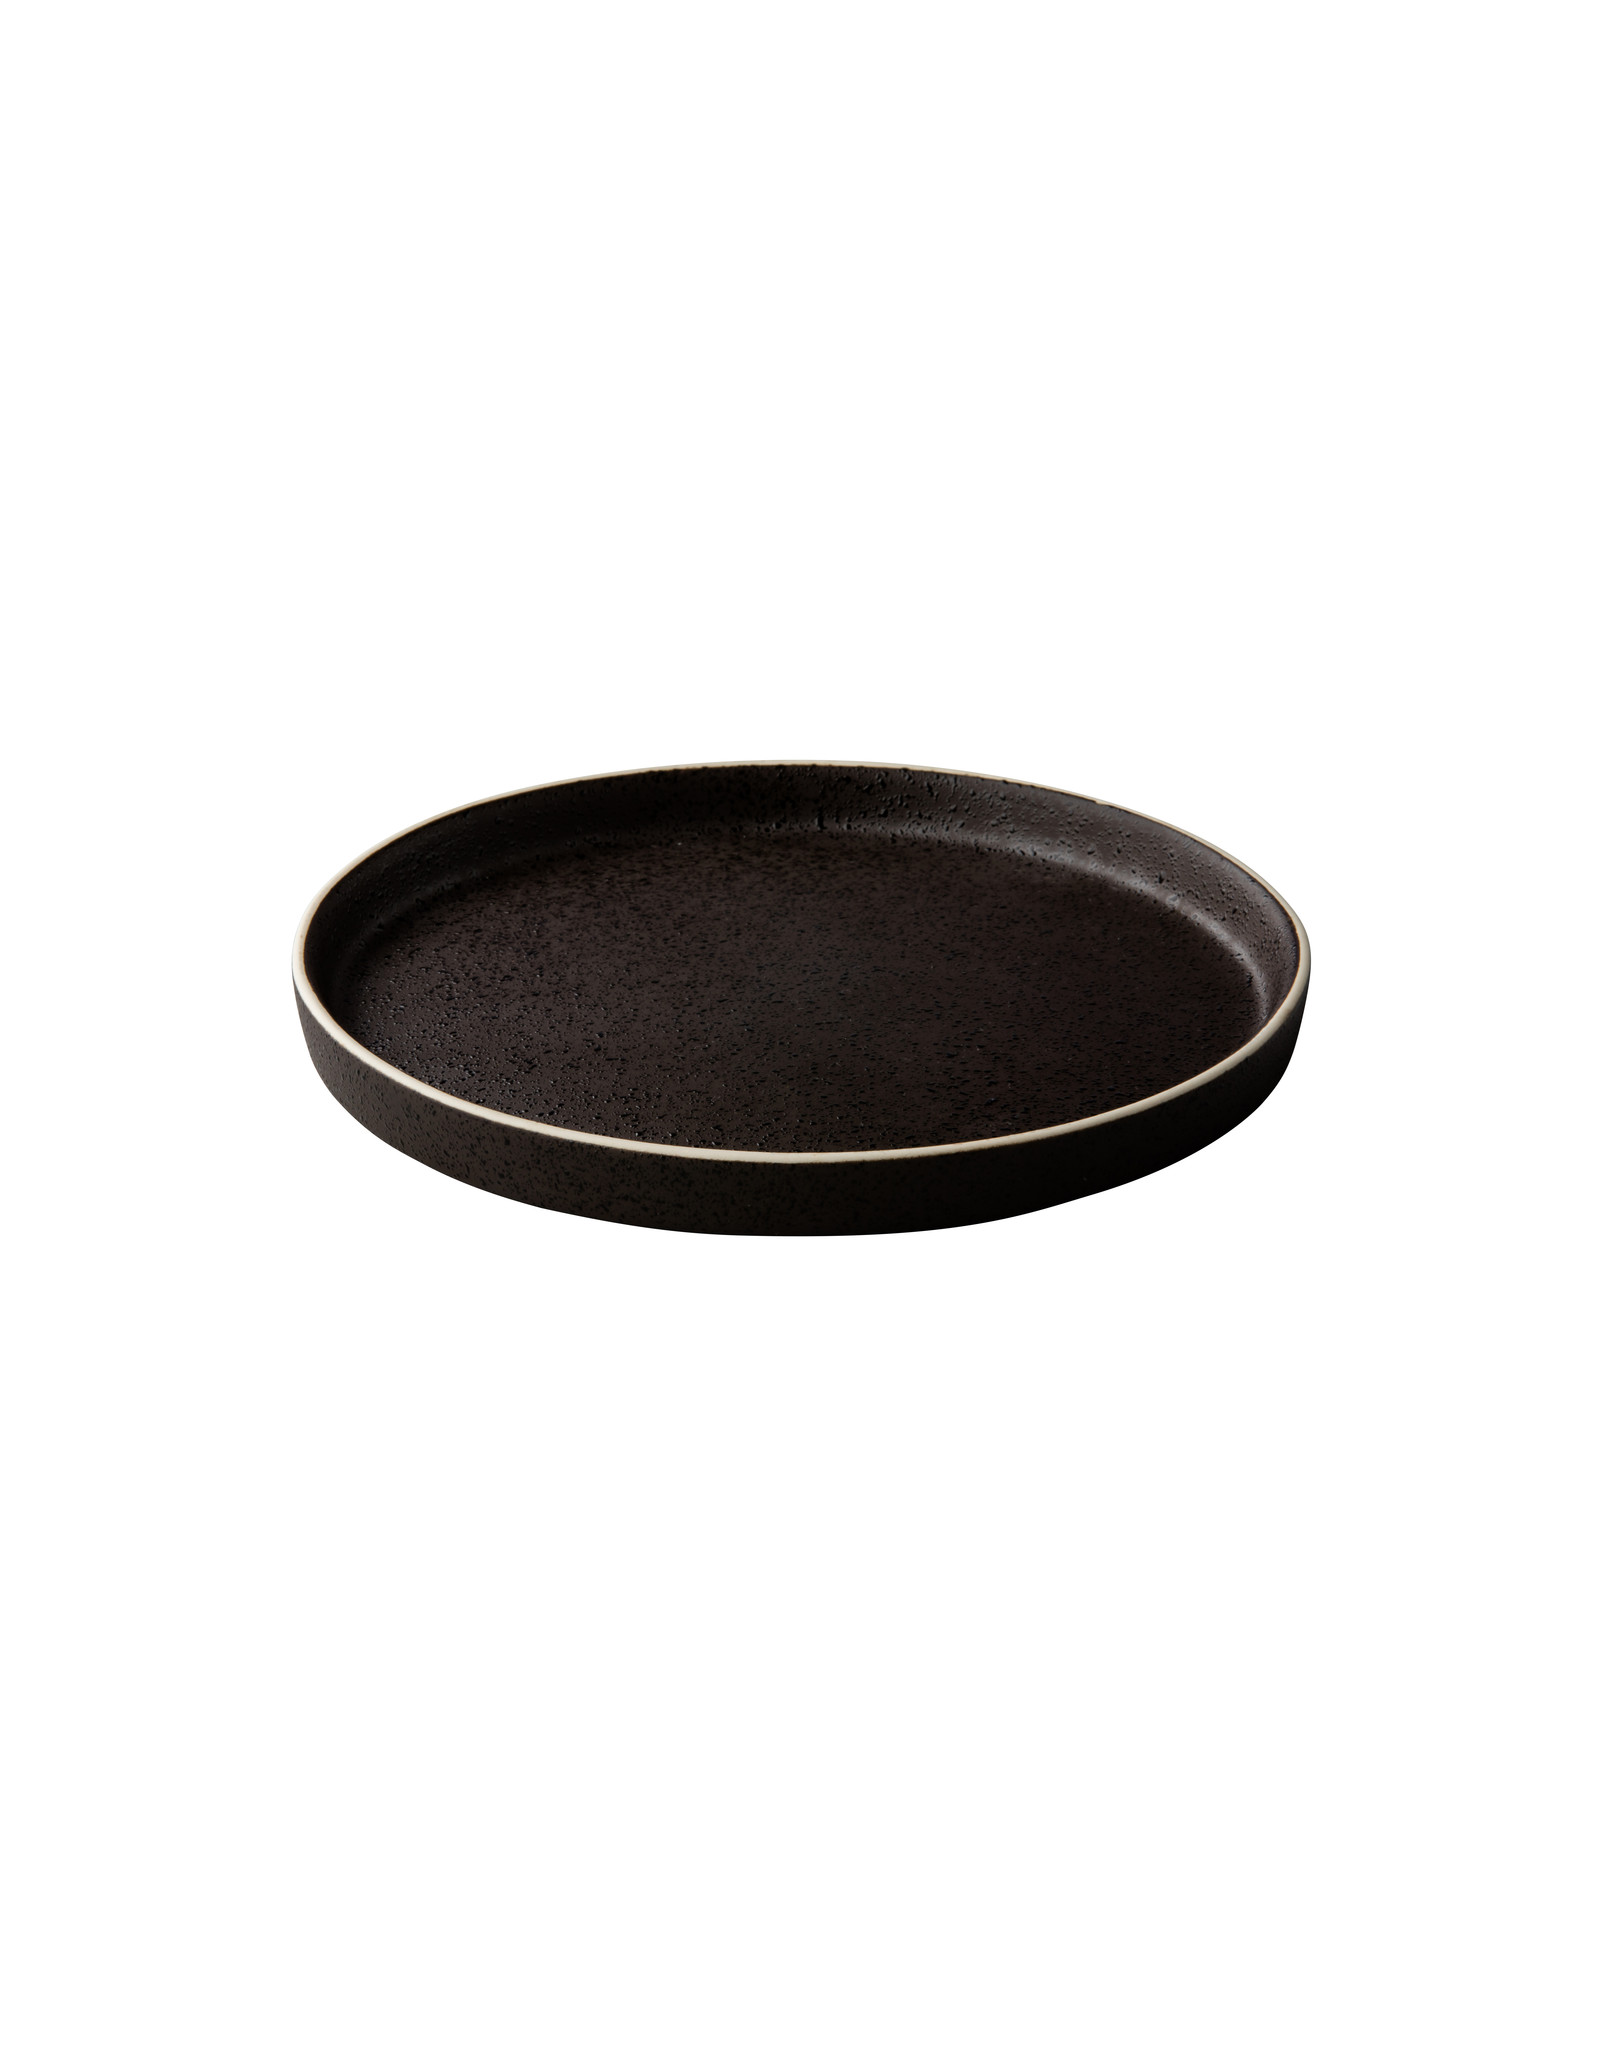 Stylepoint Bristol plate with raised edge black 22cm